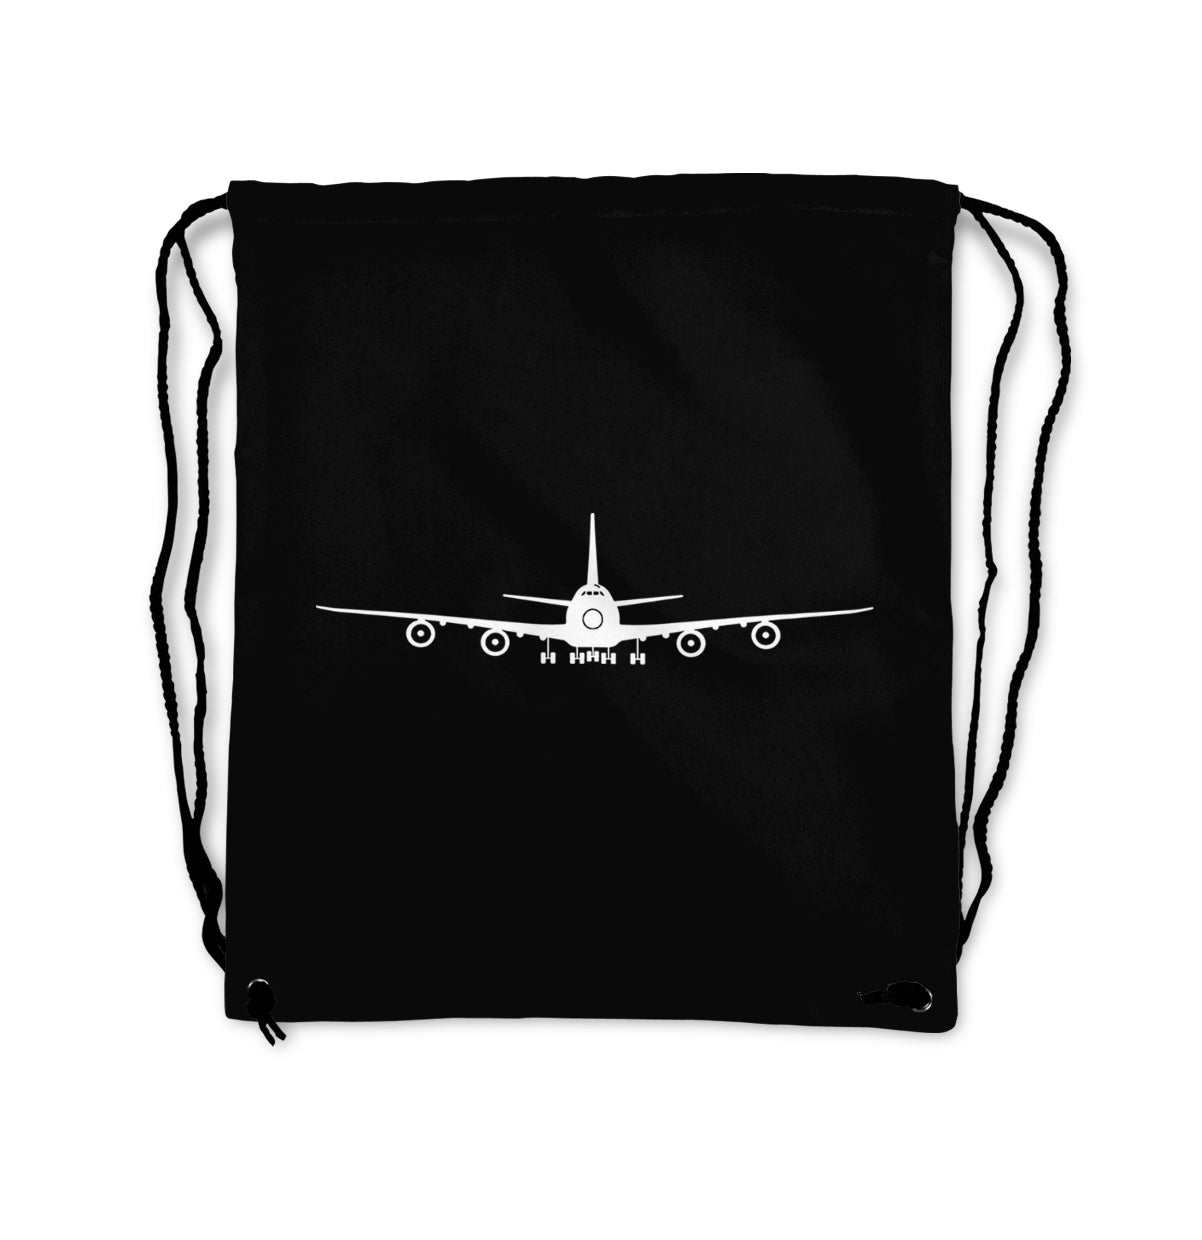 Boeing 747 Silhouette Designed Drawstring Bags